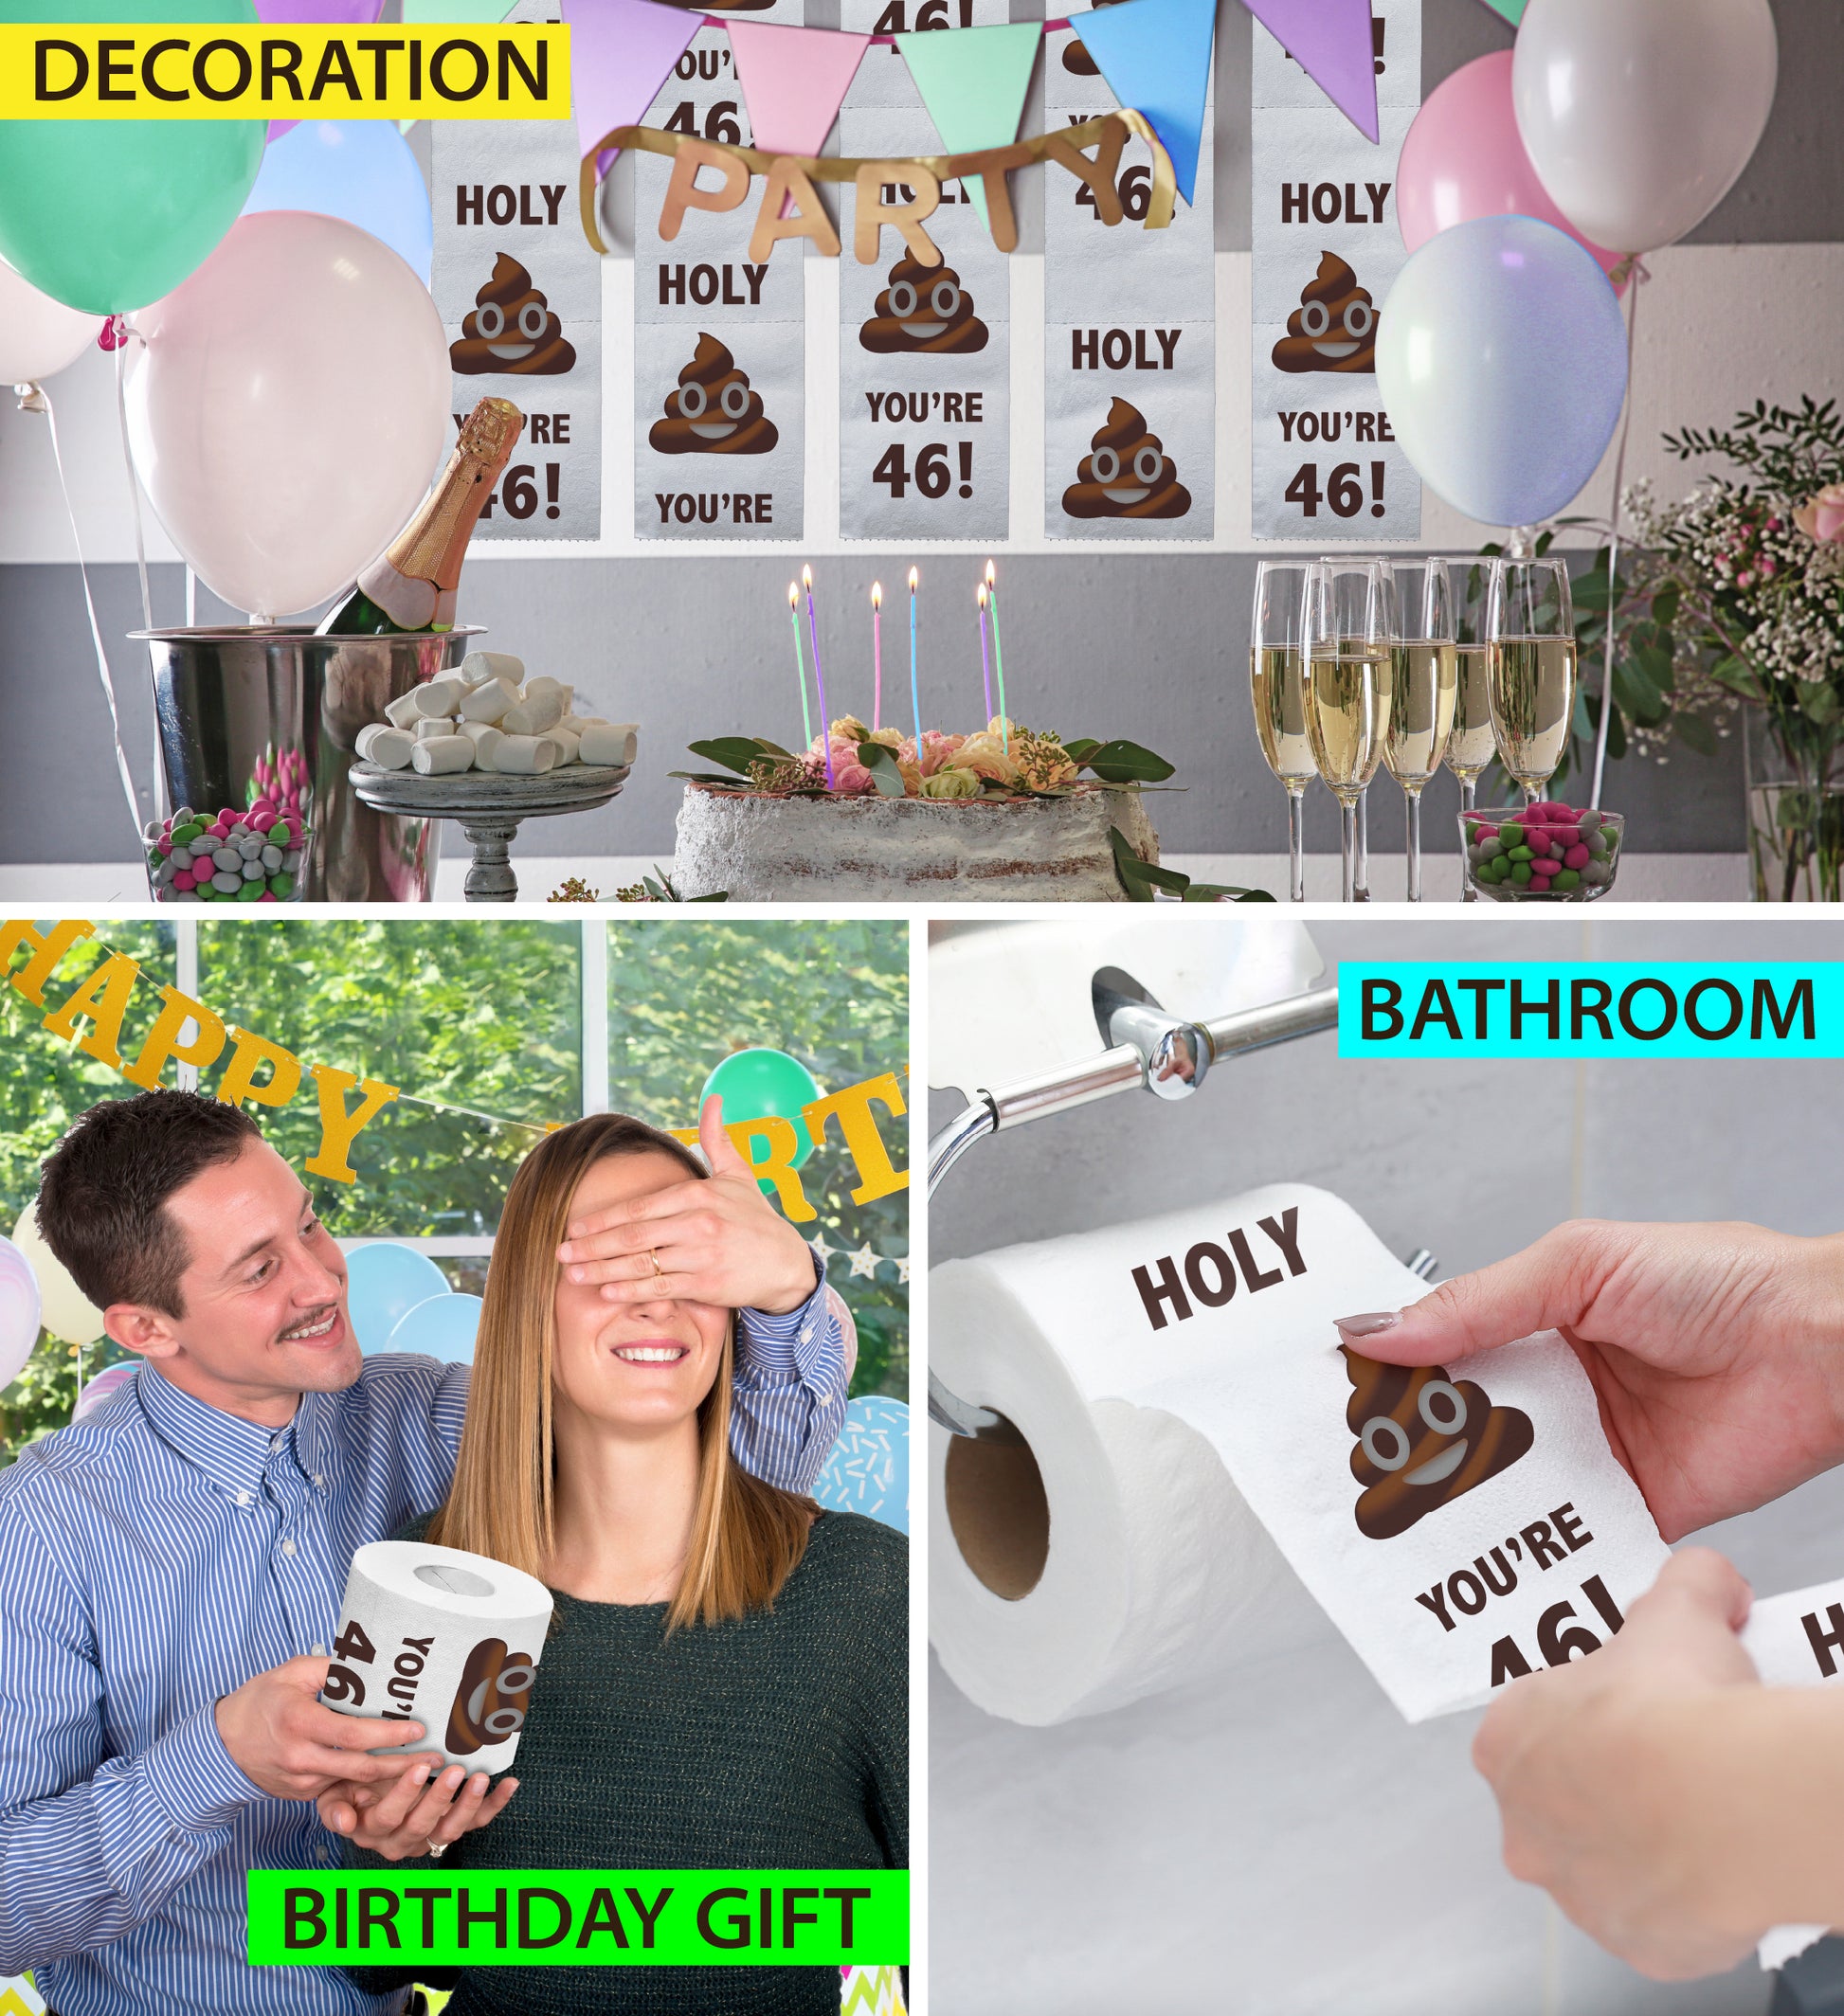 Topi Designer Toilet Paper - Happy birthday